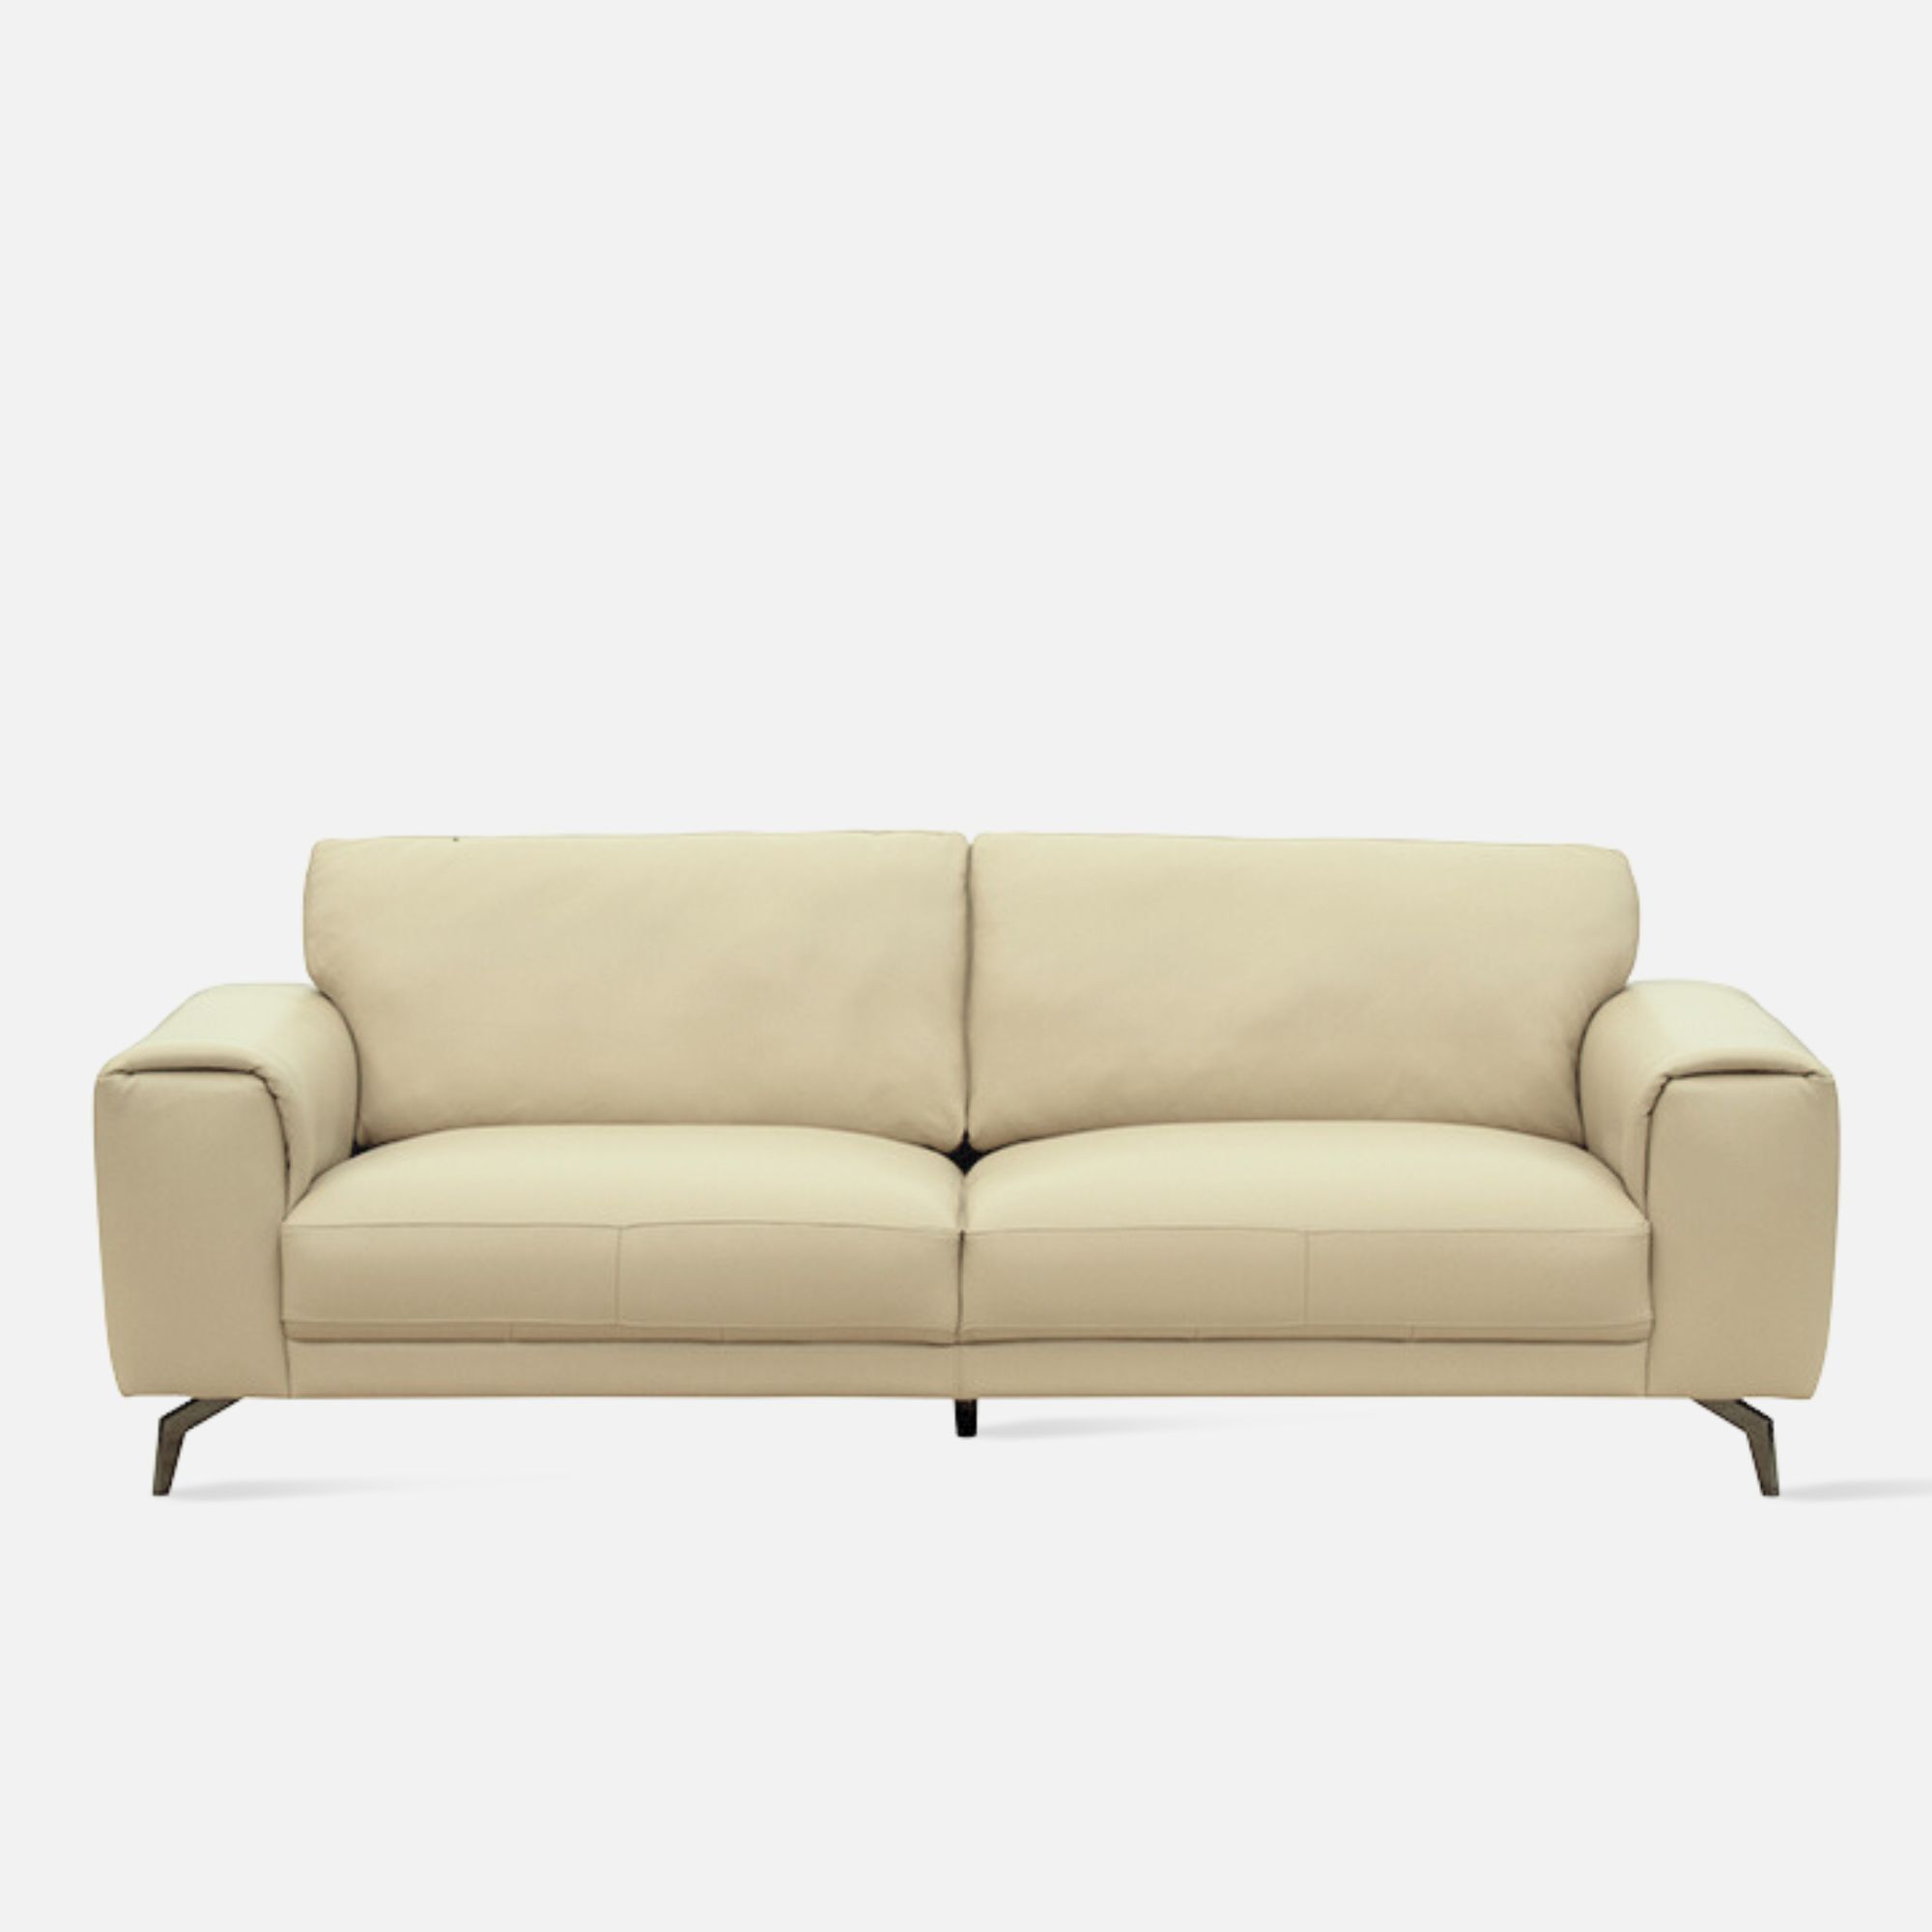 BELLA Leather Sofa